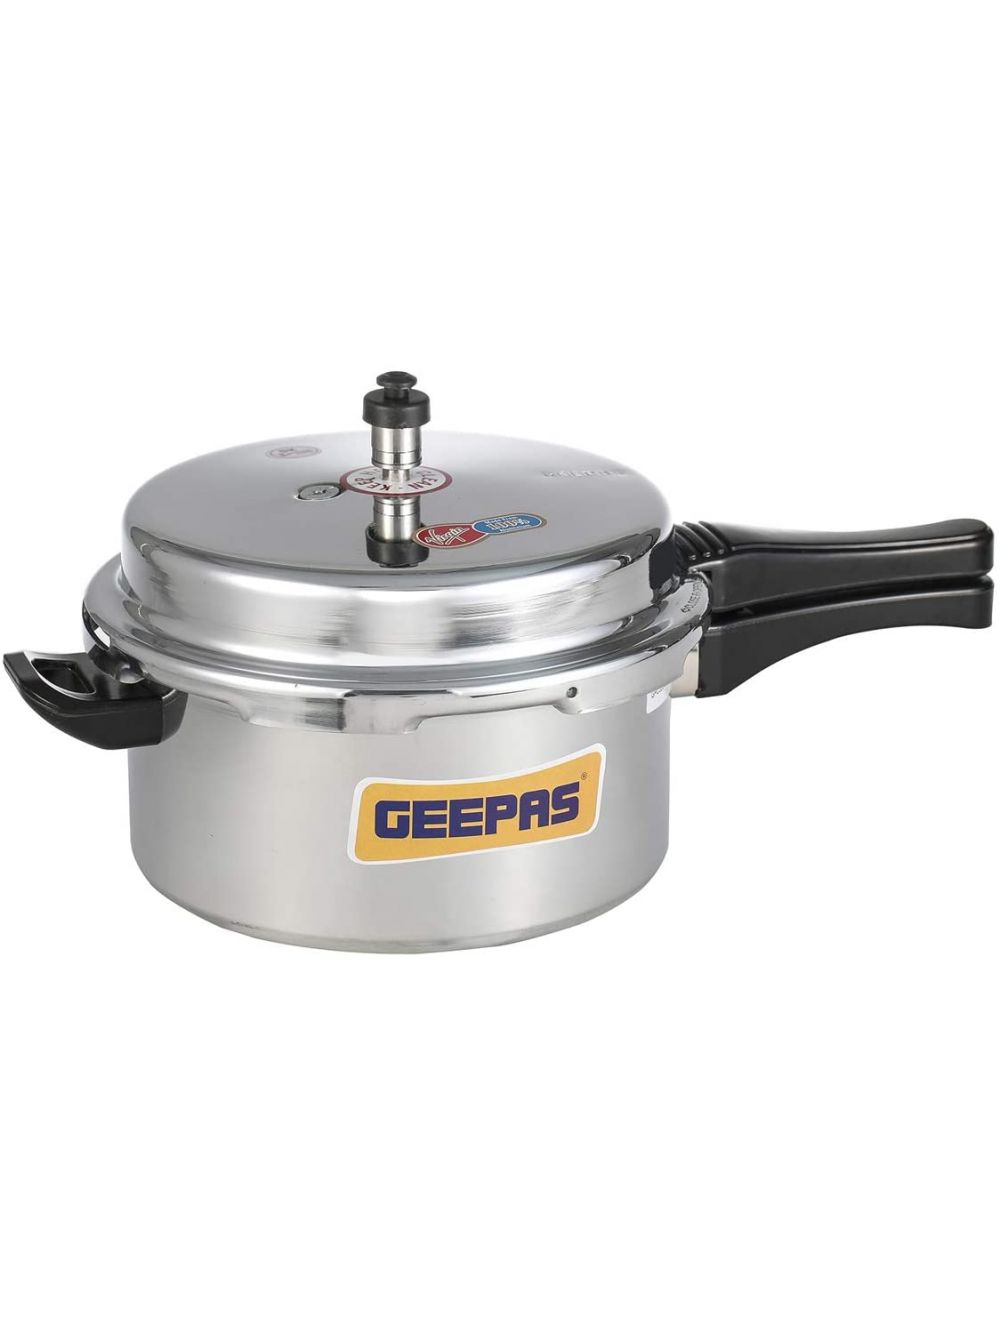 Geepas 5L Normal Pressure Cooker, Silver - GPC326